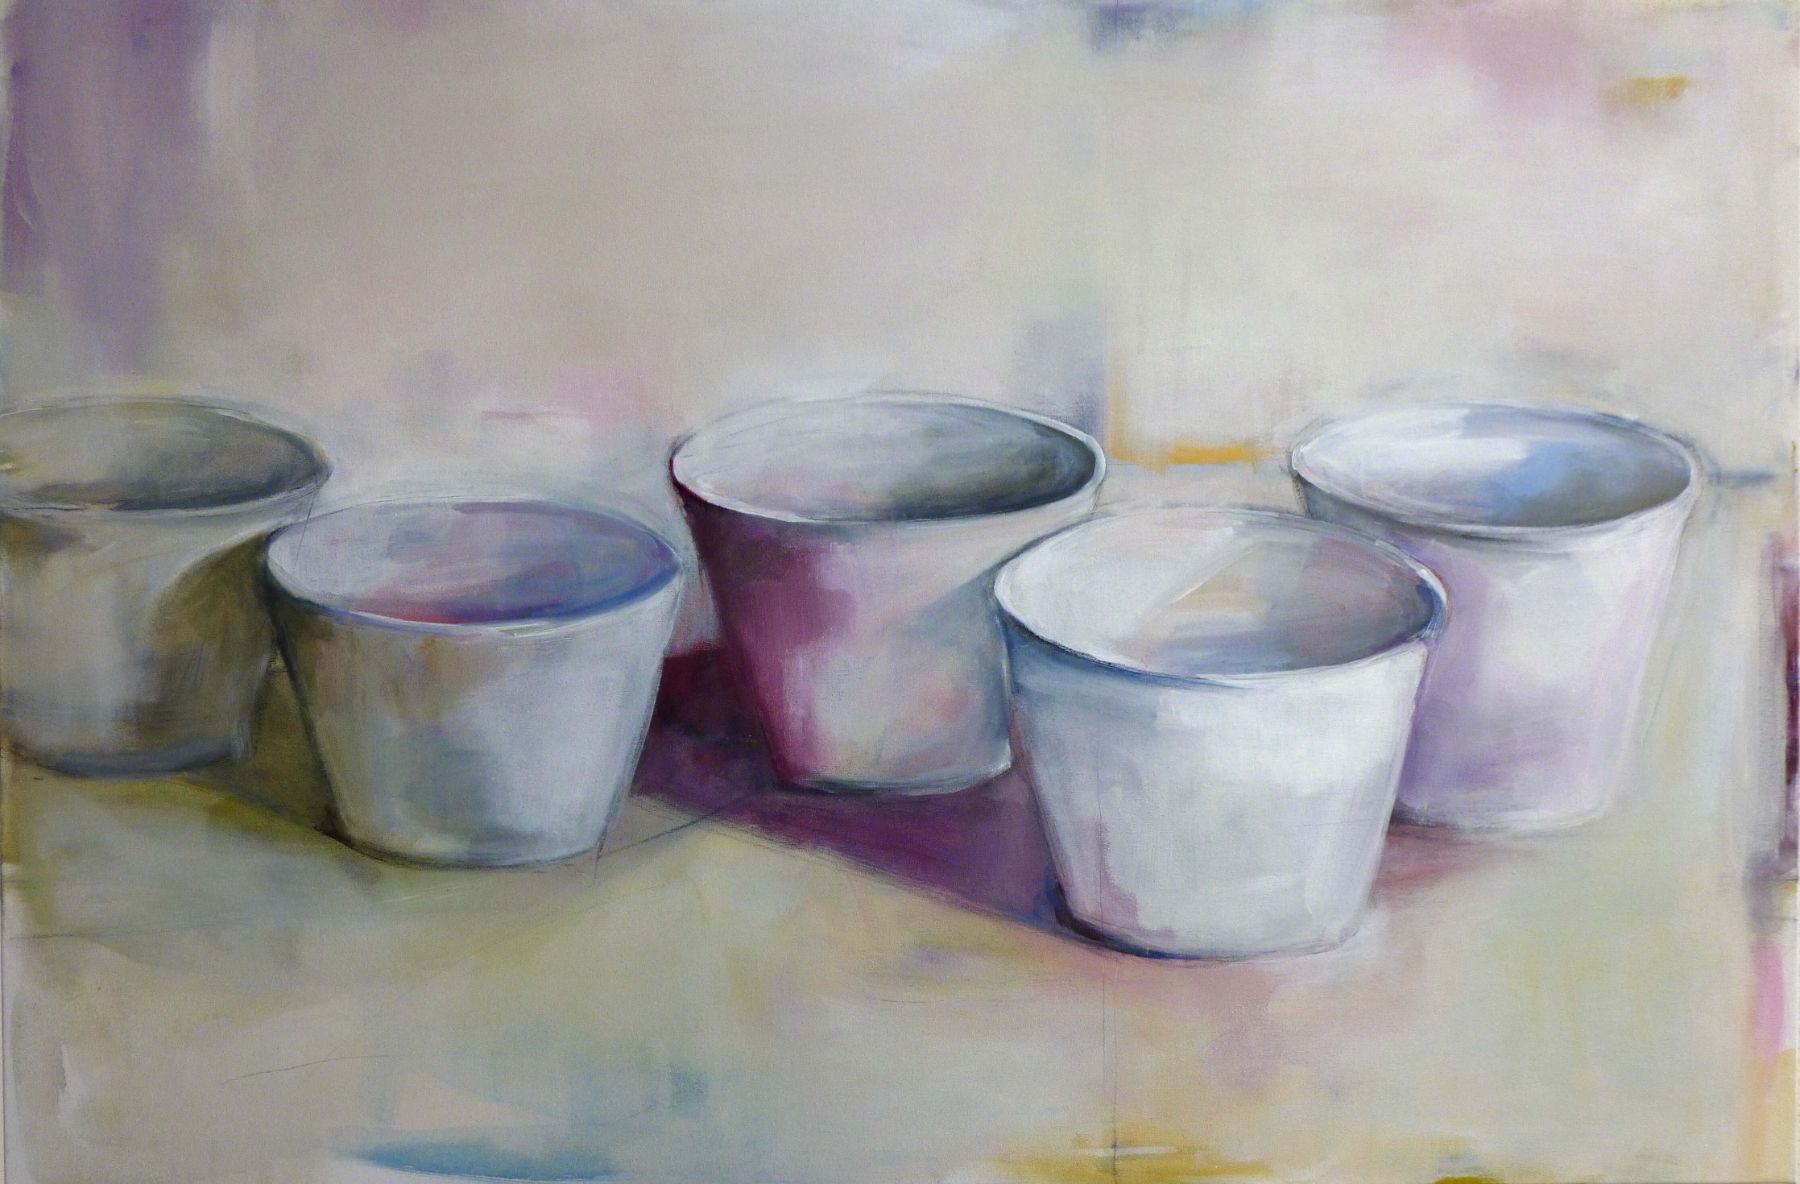 Pots - painting, acrylic on canvas by artist Neva Bergemann